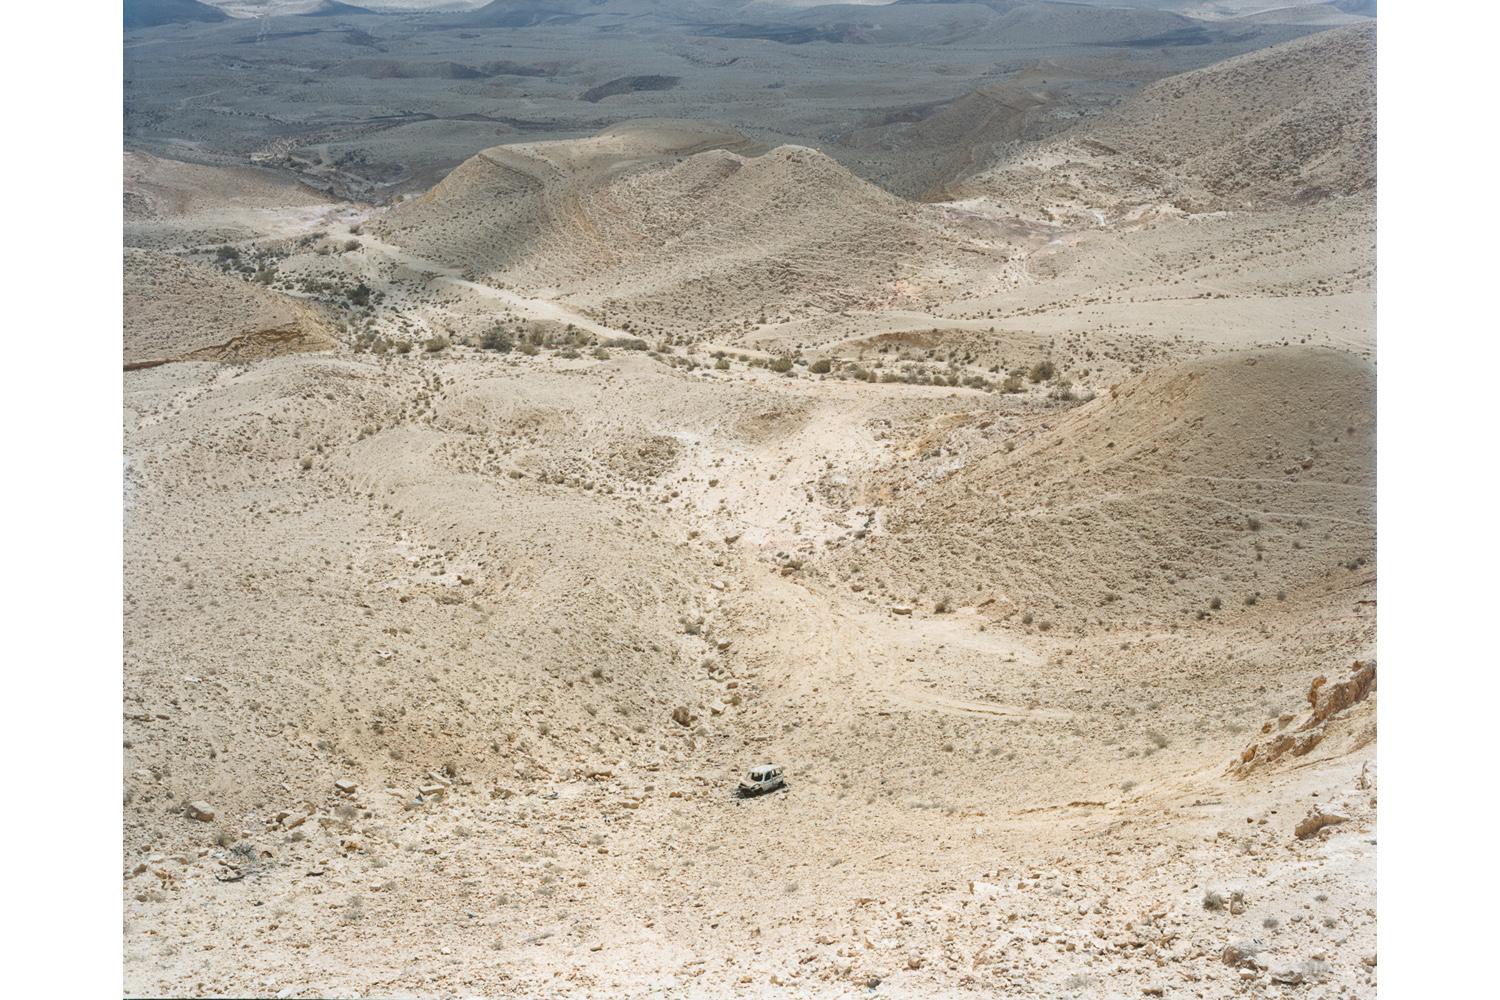 Large Crater, Negev Desert, 9/29/09